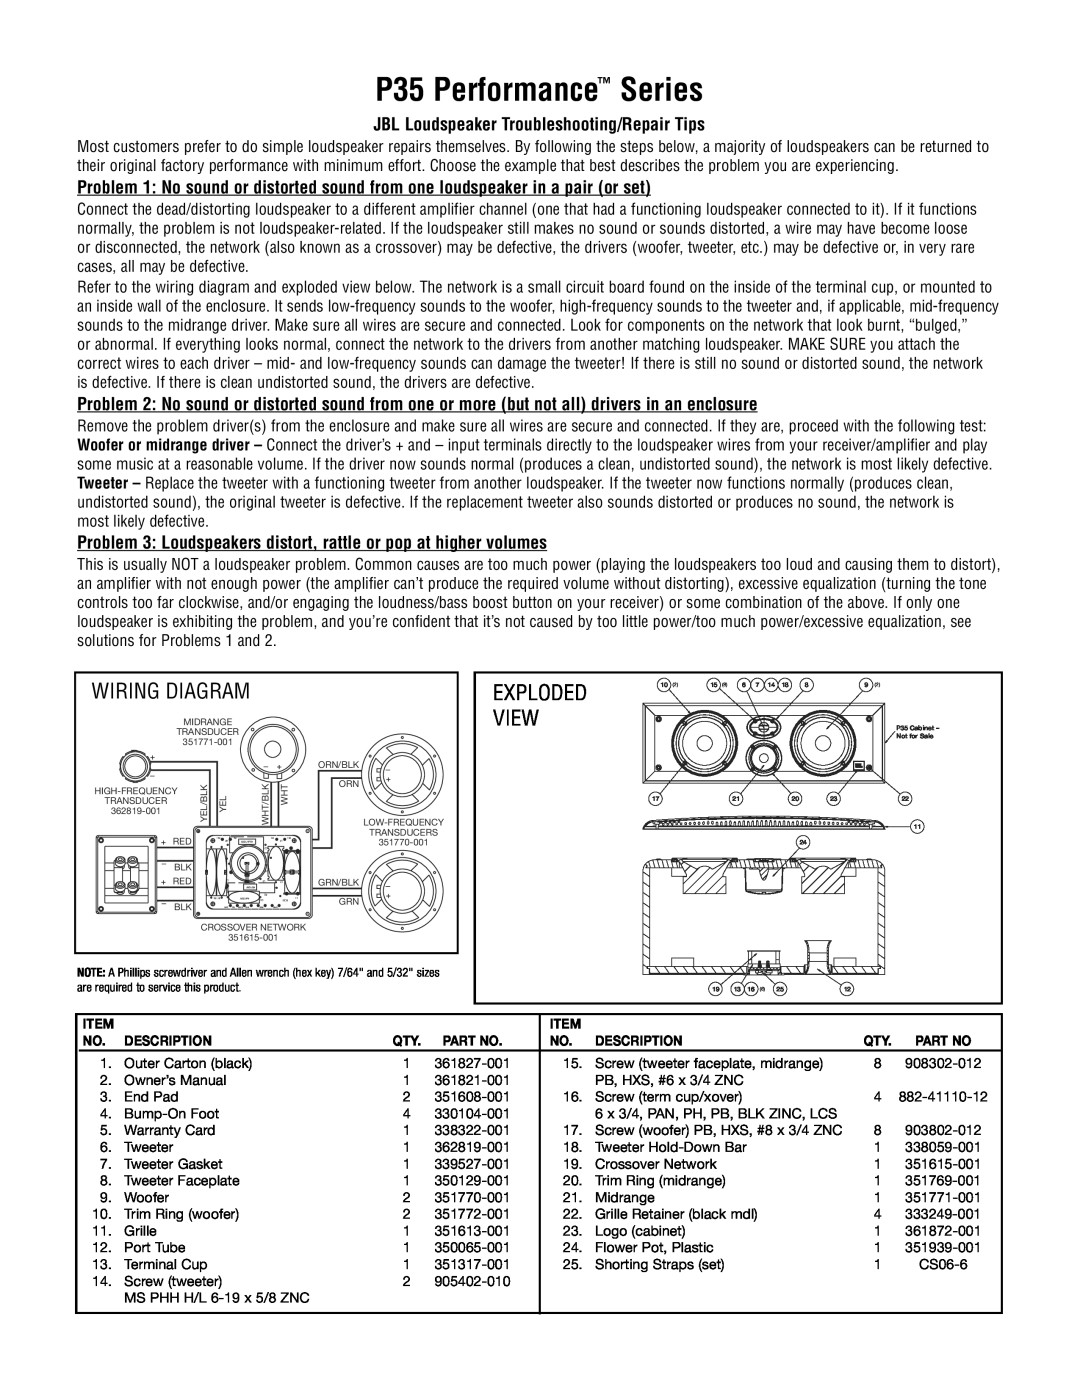 JBL manual Speaker Placement, MODELS P25, P35, Owner’S Guide, Performance Series 